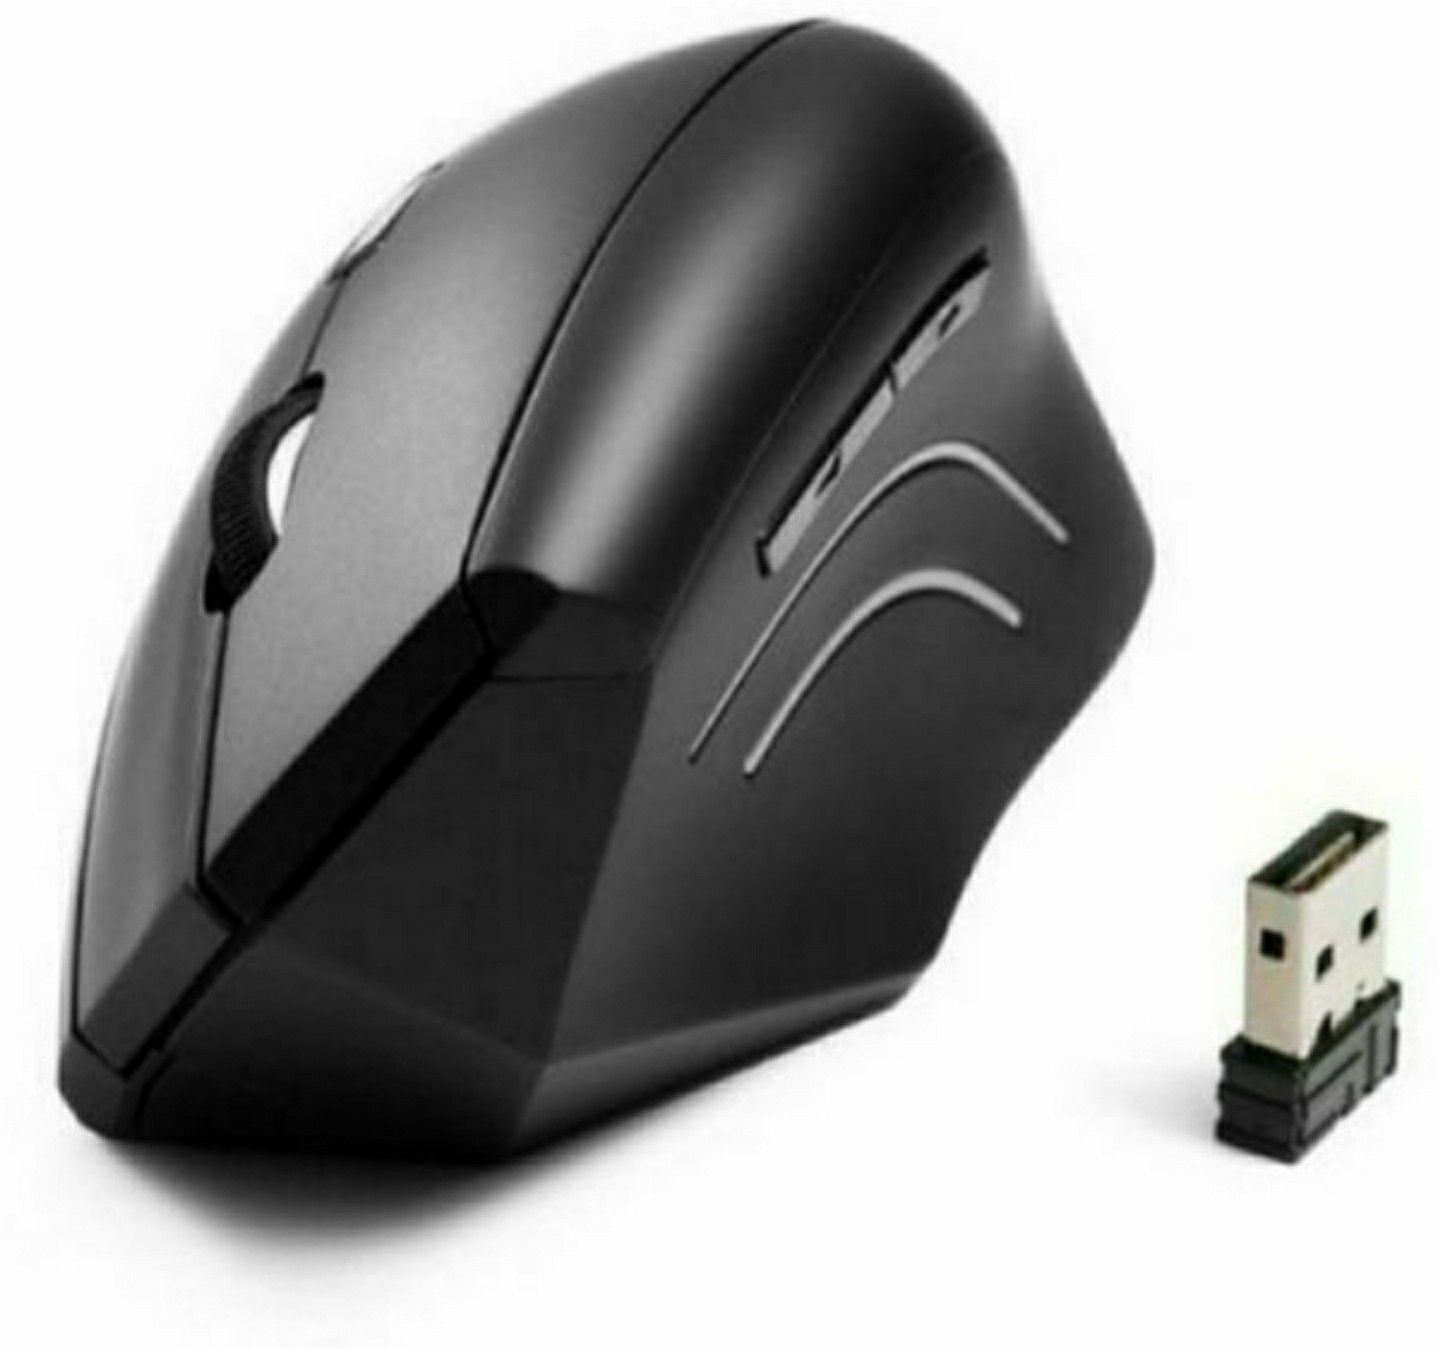 Anker 2.4G Wireless Vertical Ergonomic Optical Mouse, 800 / 1200 /1600 DPI, 5 Buttons for Laptop, Desktop, PC, Macbook - Black